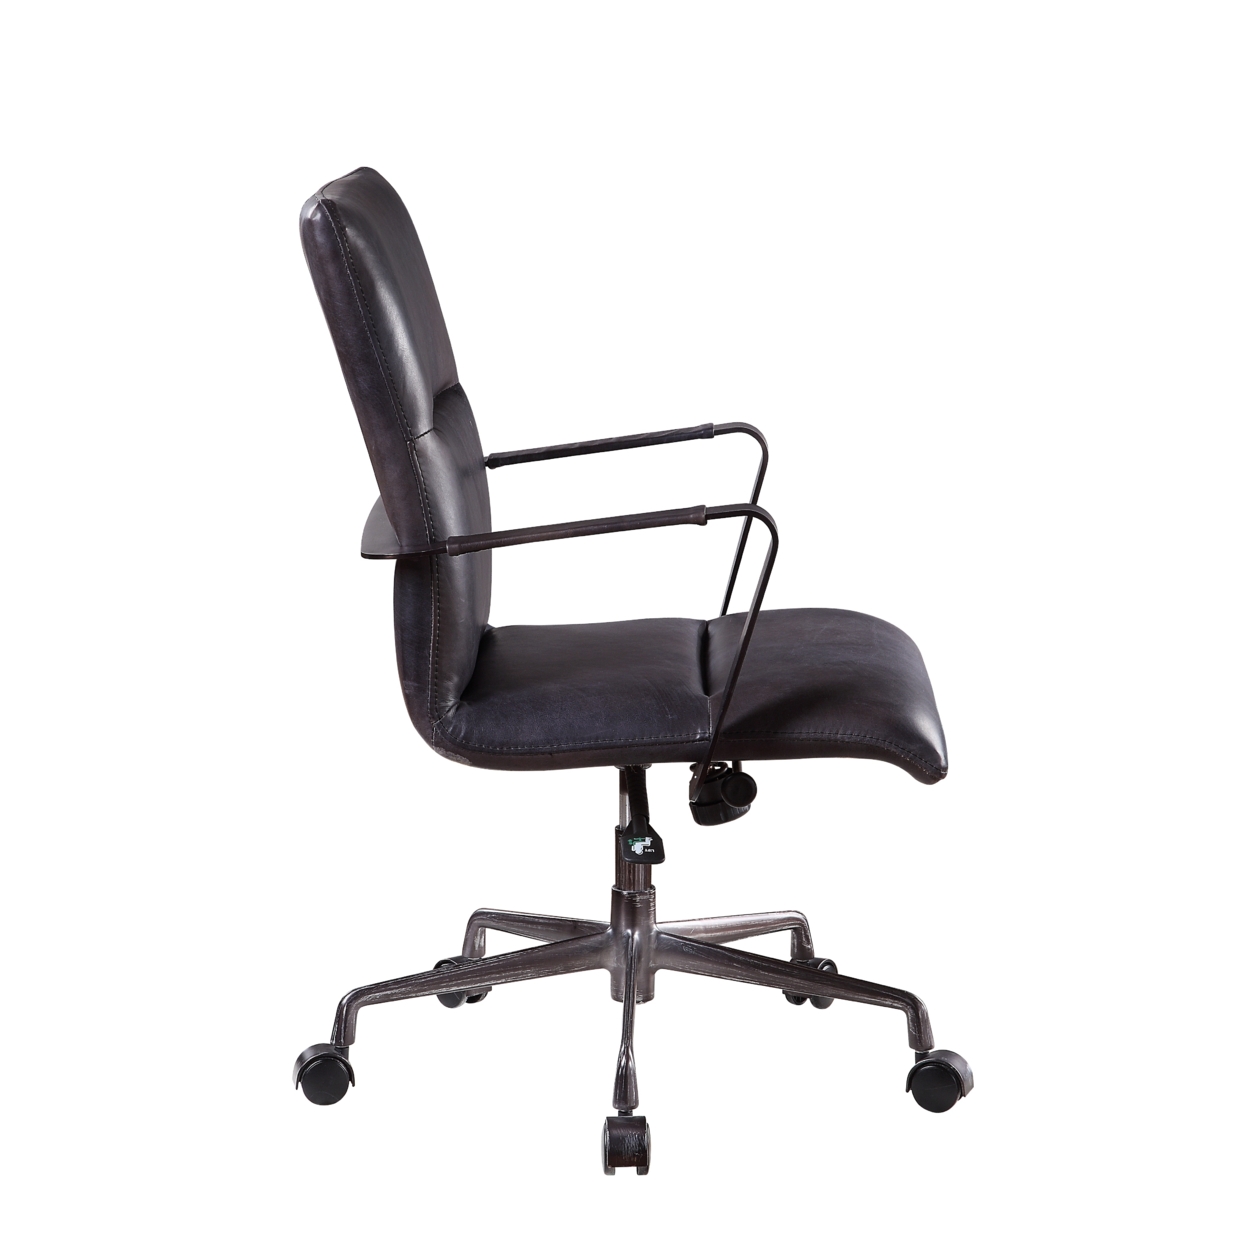 5 Star Base Faux Leather Upholstered Wooden Office Chair, Black- Saltoro Sherpi